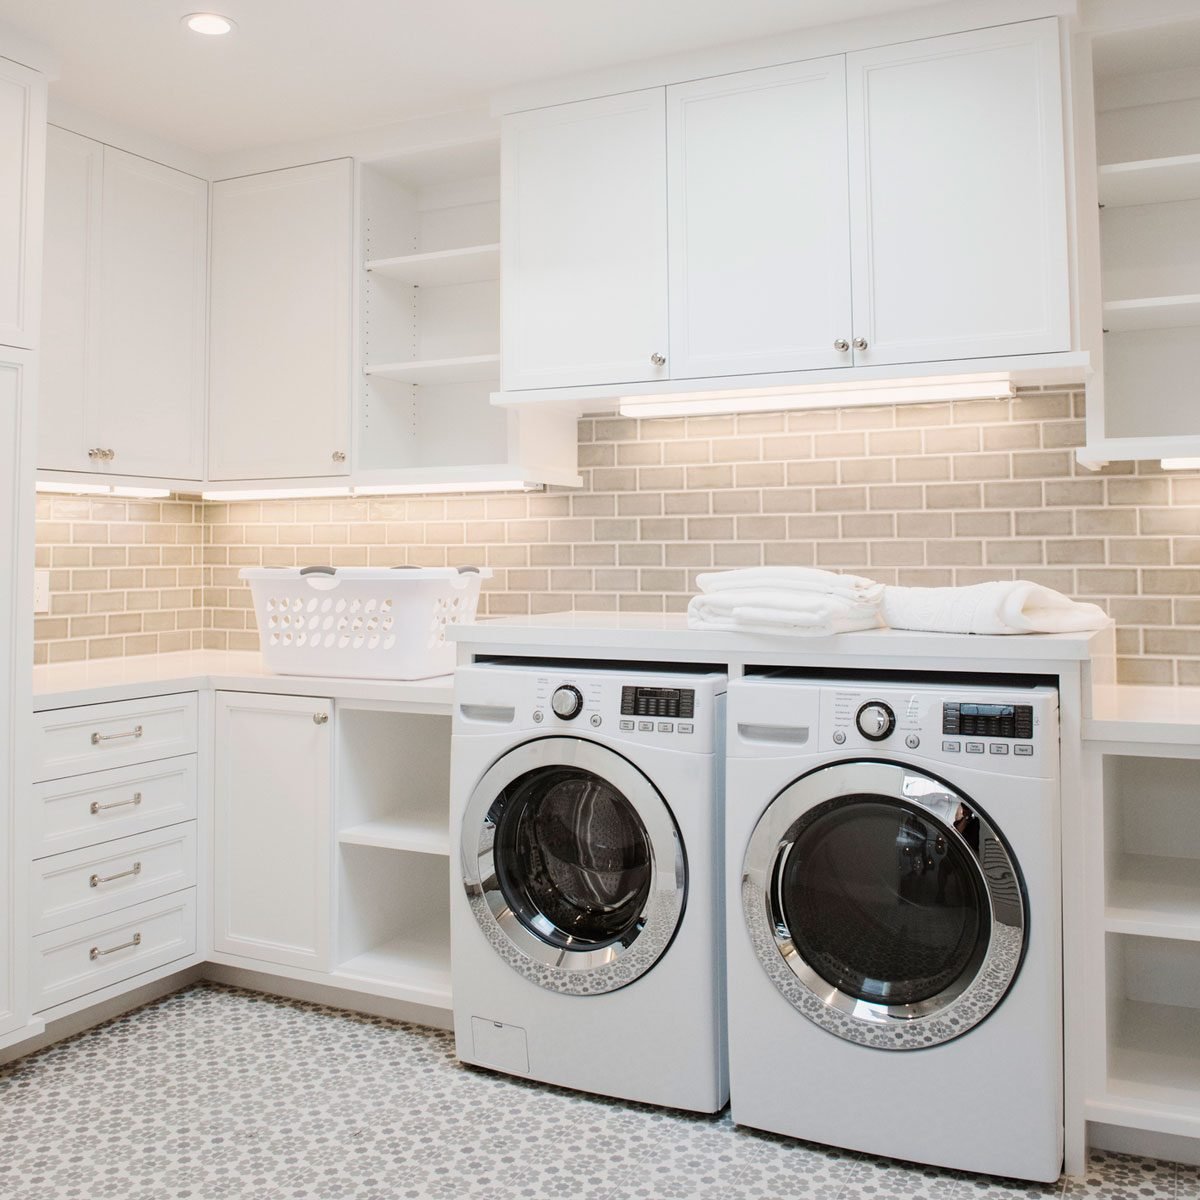 25 Laundry Room Ideas You Can Diy Today Family Handyman - Diy Laundry Room Storage Shelves